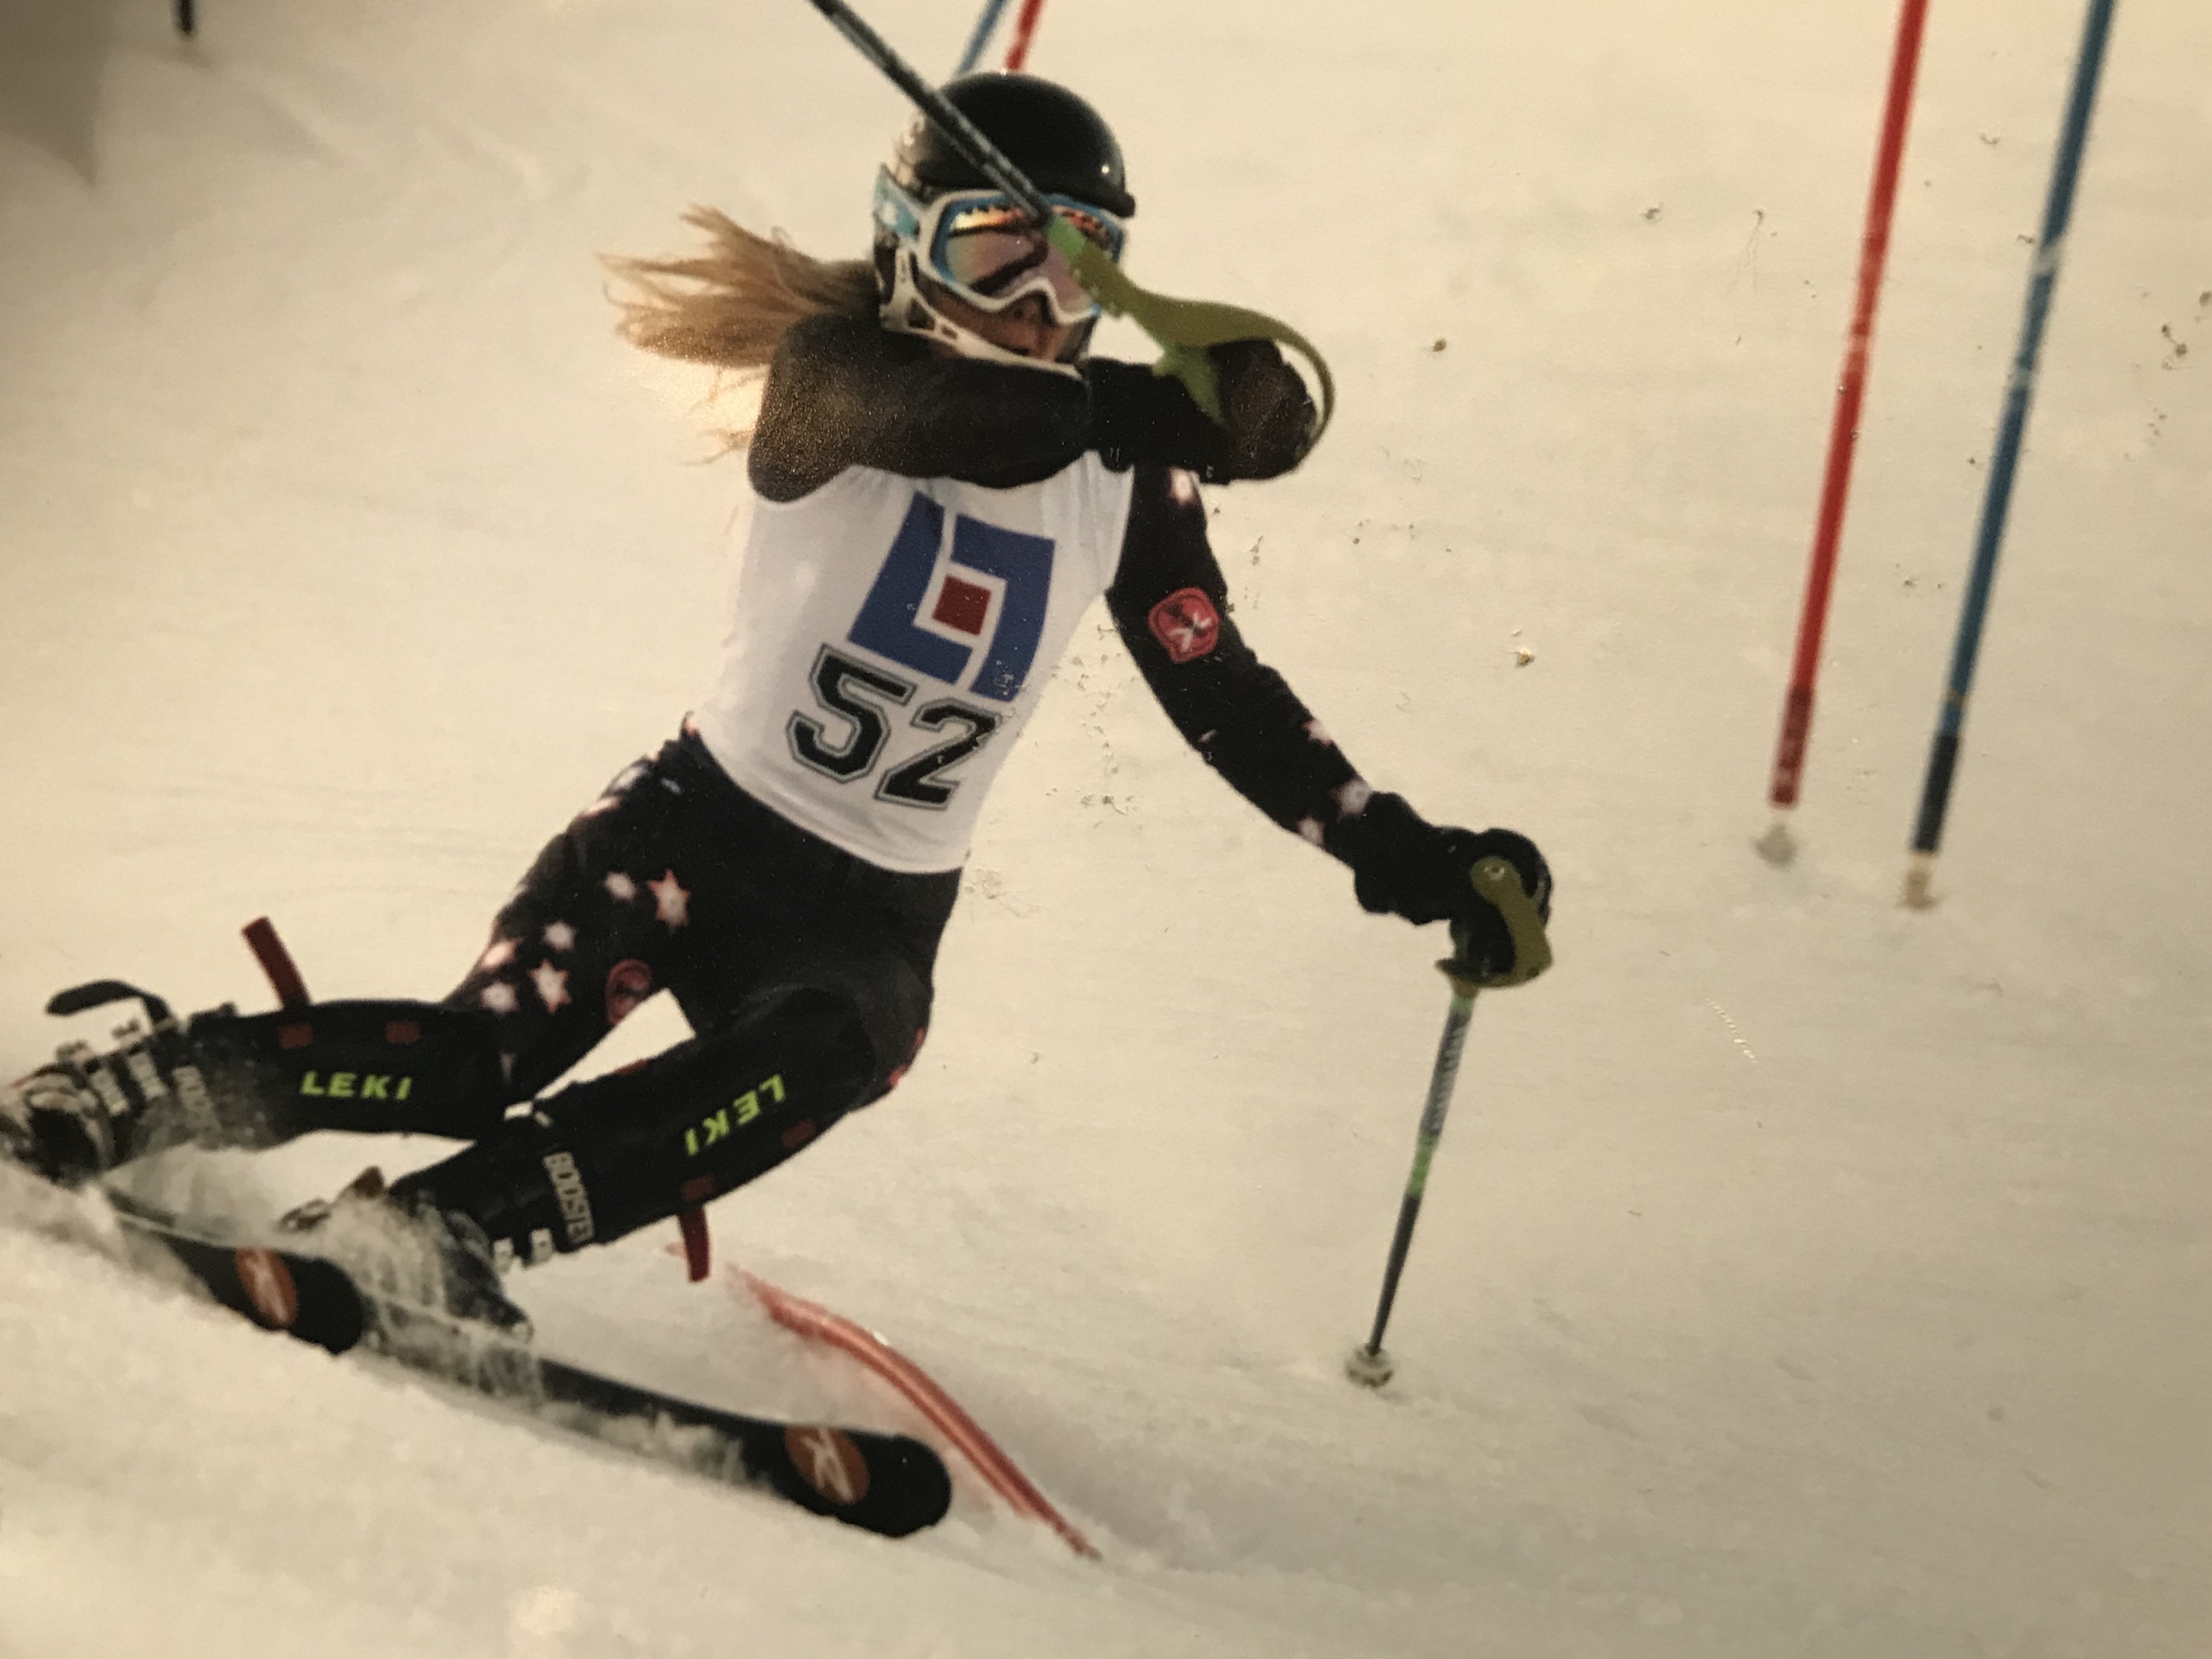 Agnes kör FIS-slalom